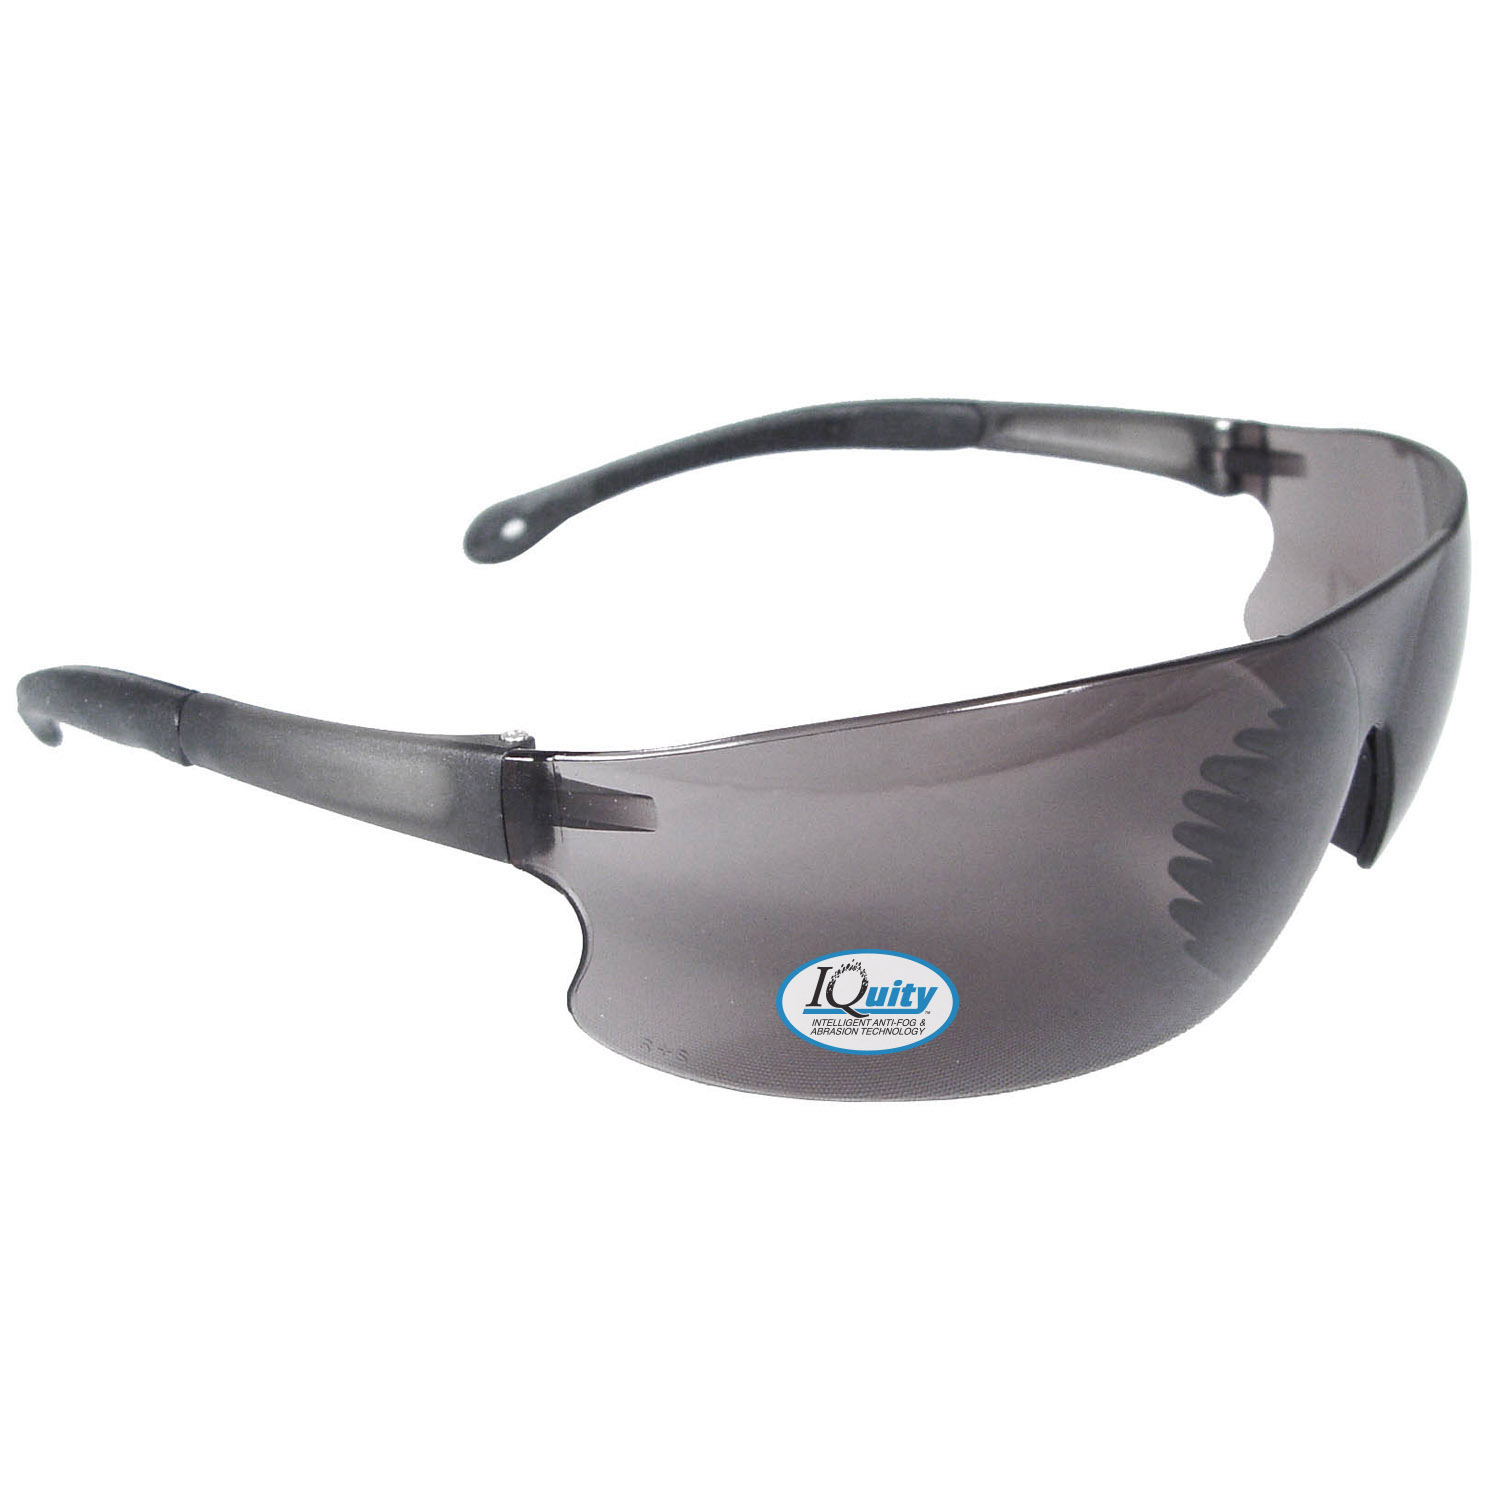 Rad-Sequel™ IQ - IQUITY™ Anti-Fog Safety Eyewear - Smoke Frame - Smoke IQ Anti-Fog Lens